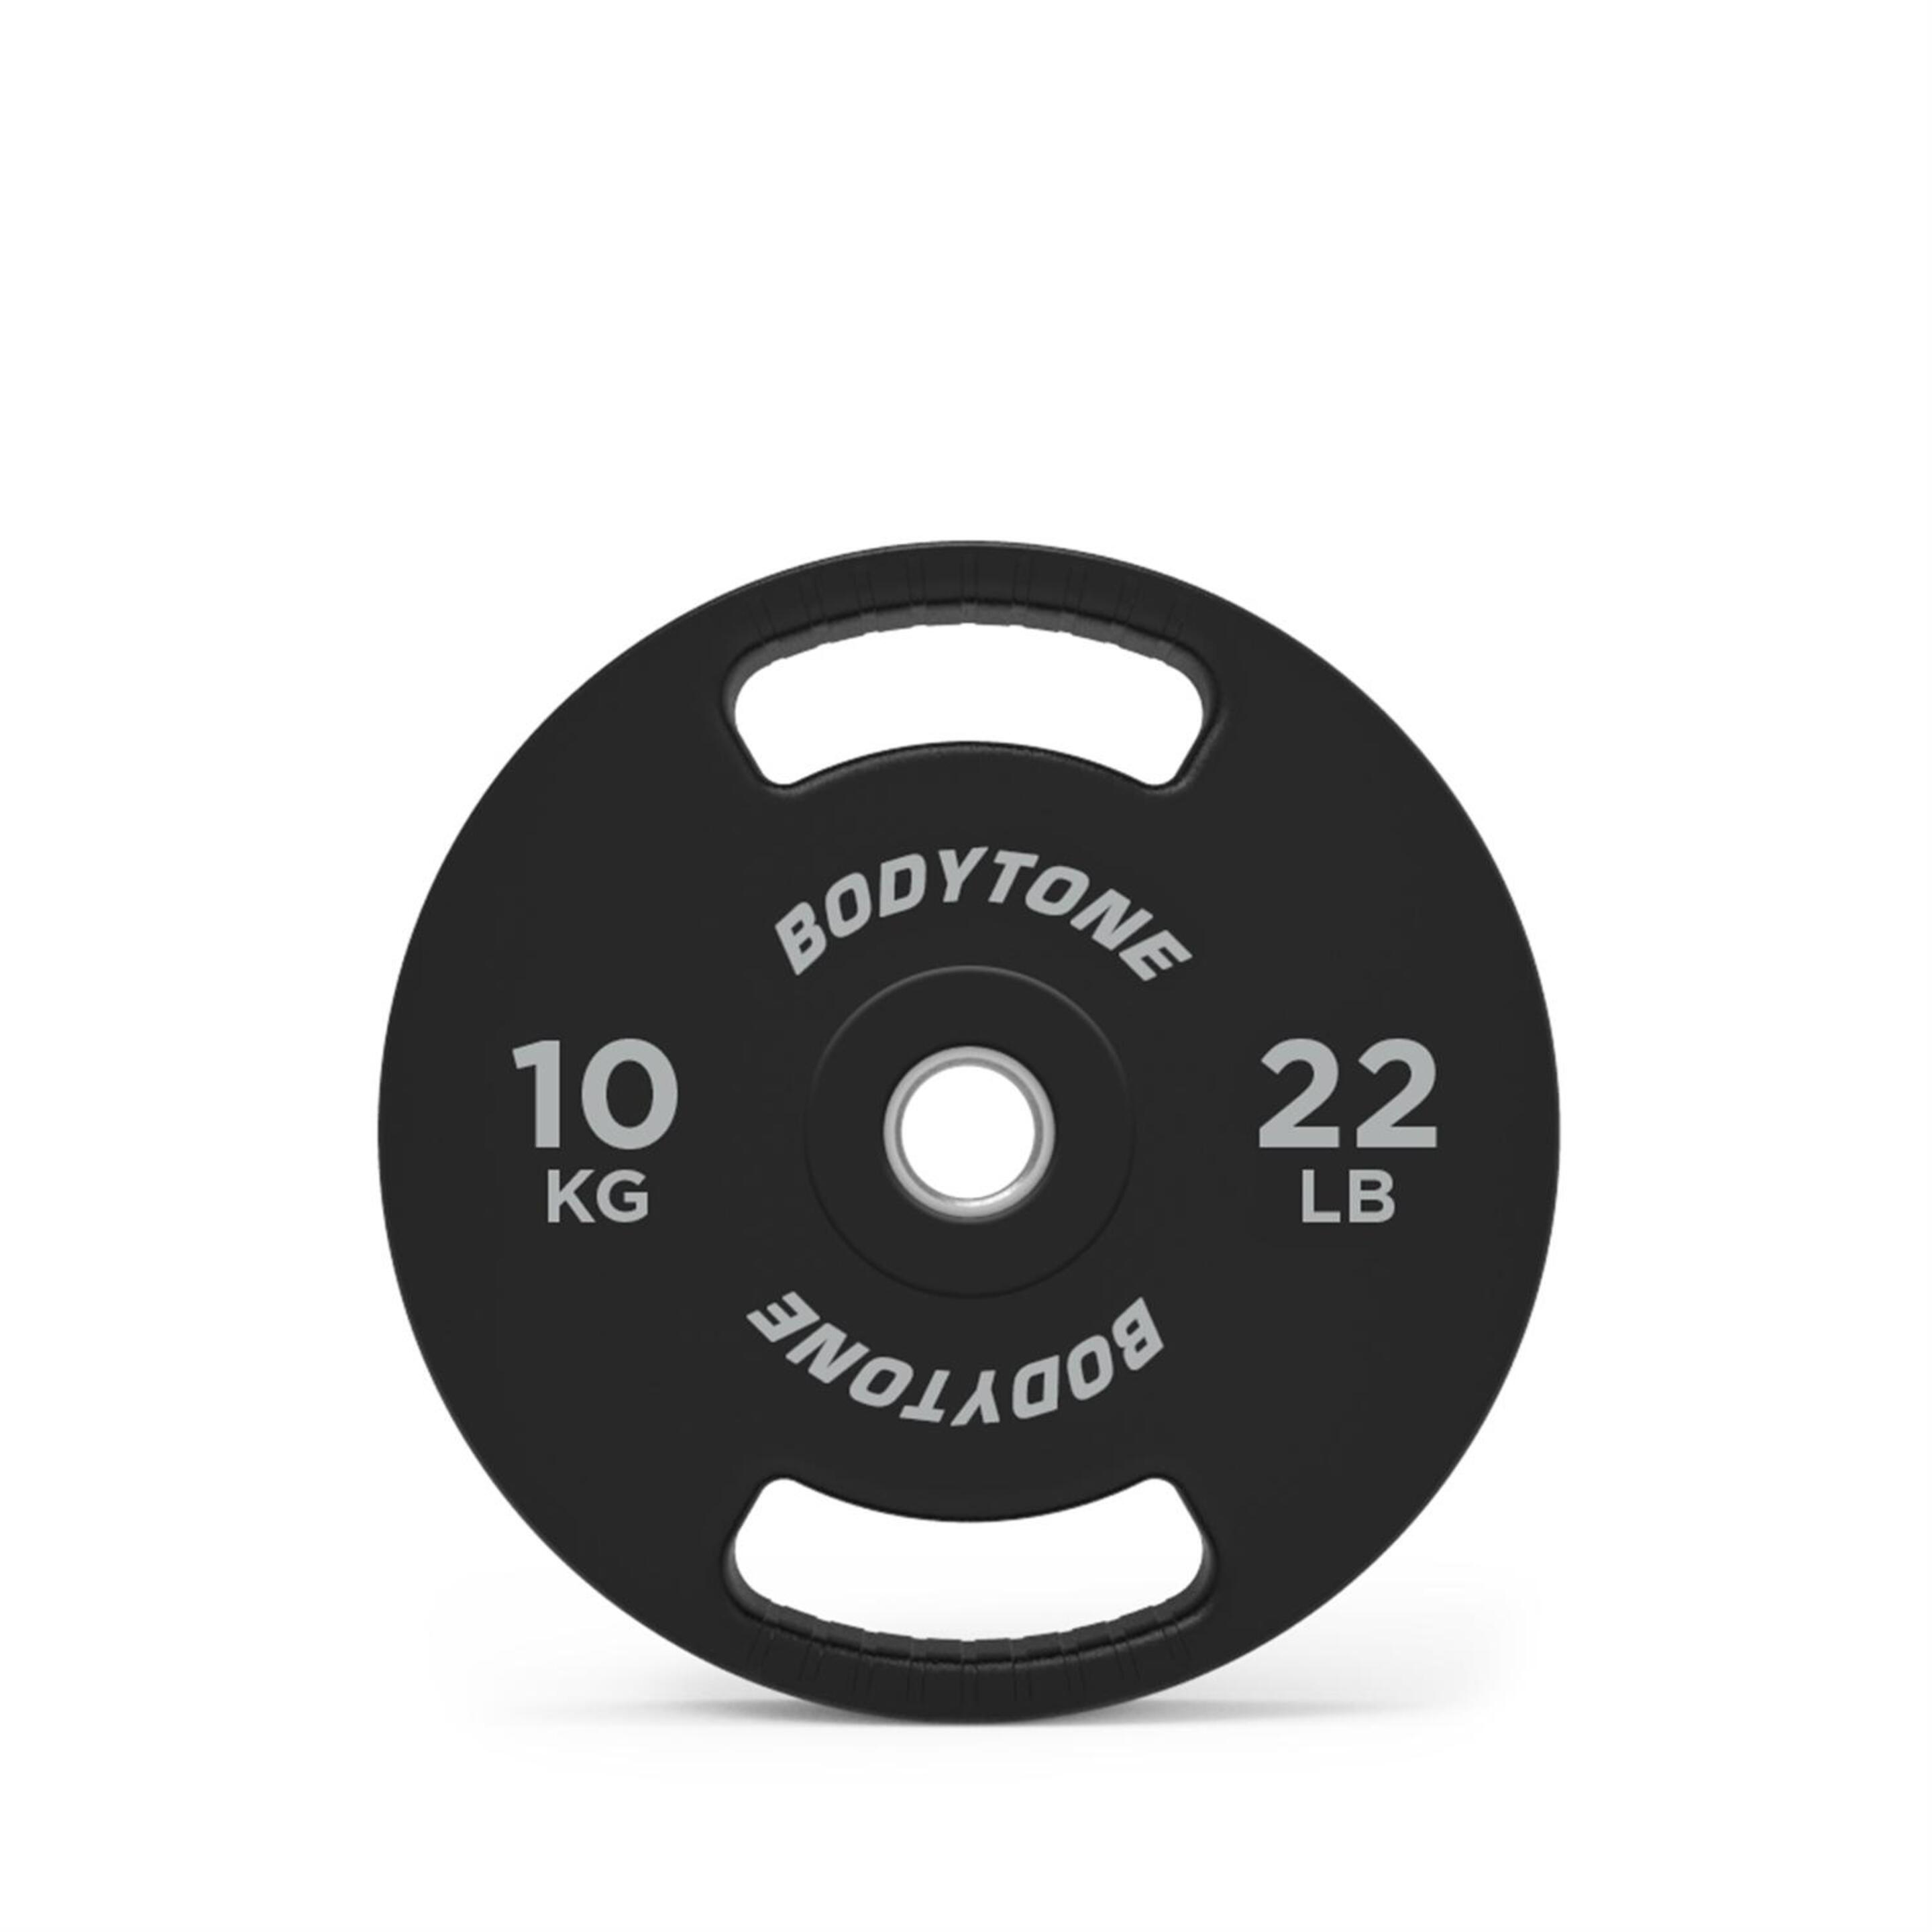 Disco Pesas 10kg Bodytone - Negro - Accesorios Musculación  MKP